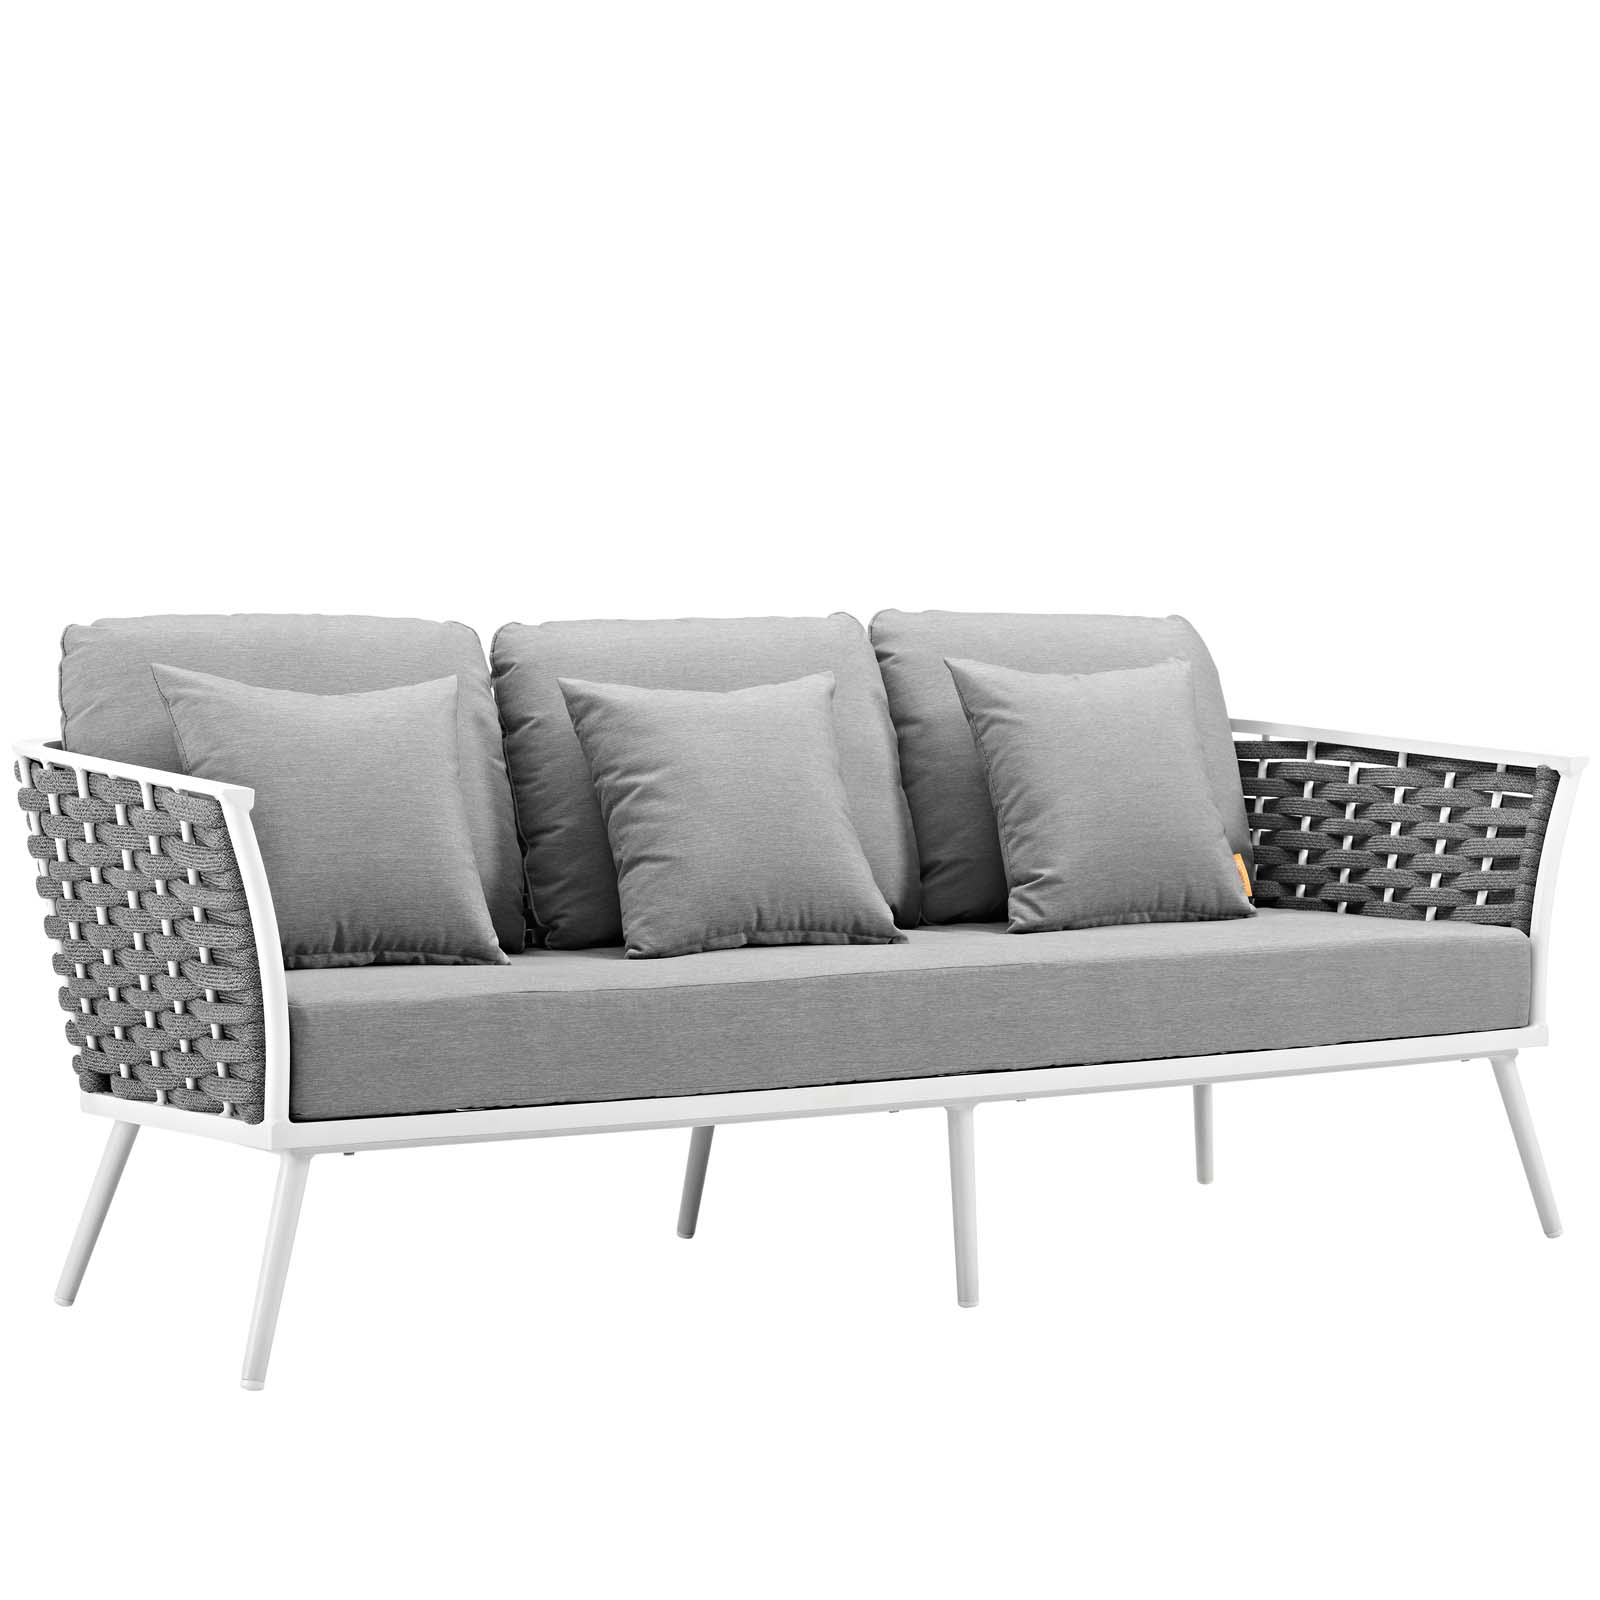 Modern Contemporary Urban Outdoor Patio Balcony Garden Furniture Lounge Chair, Sofa and Table Set, Fabric Aluminium, White Grey Gray - image 5 of 8